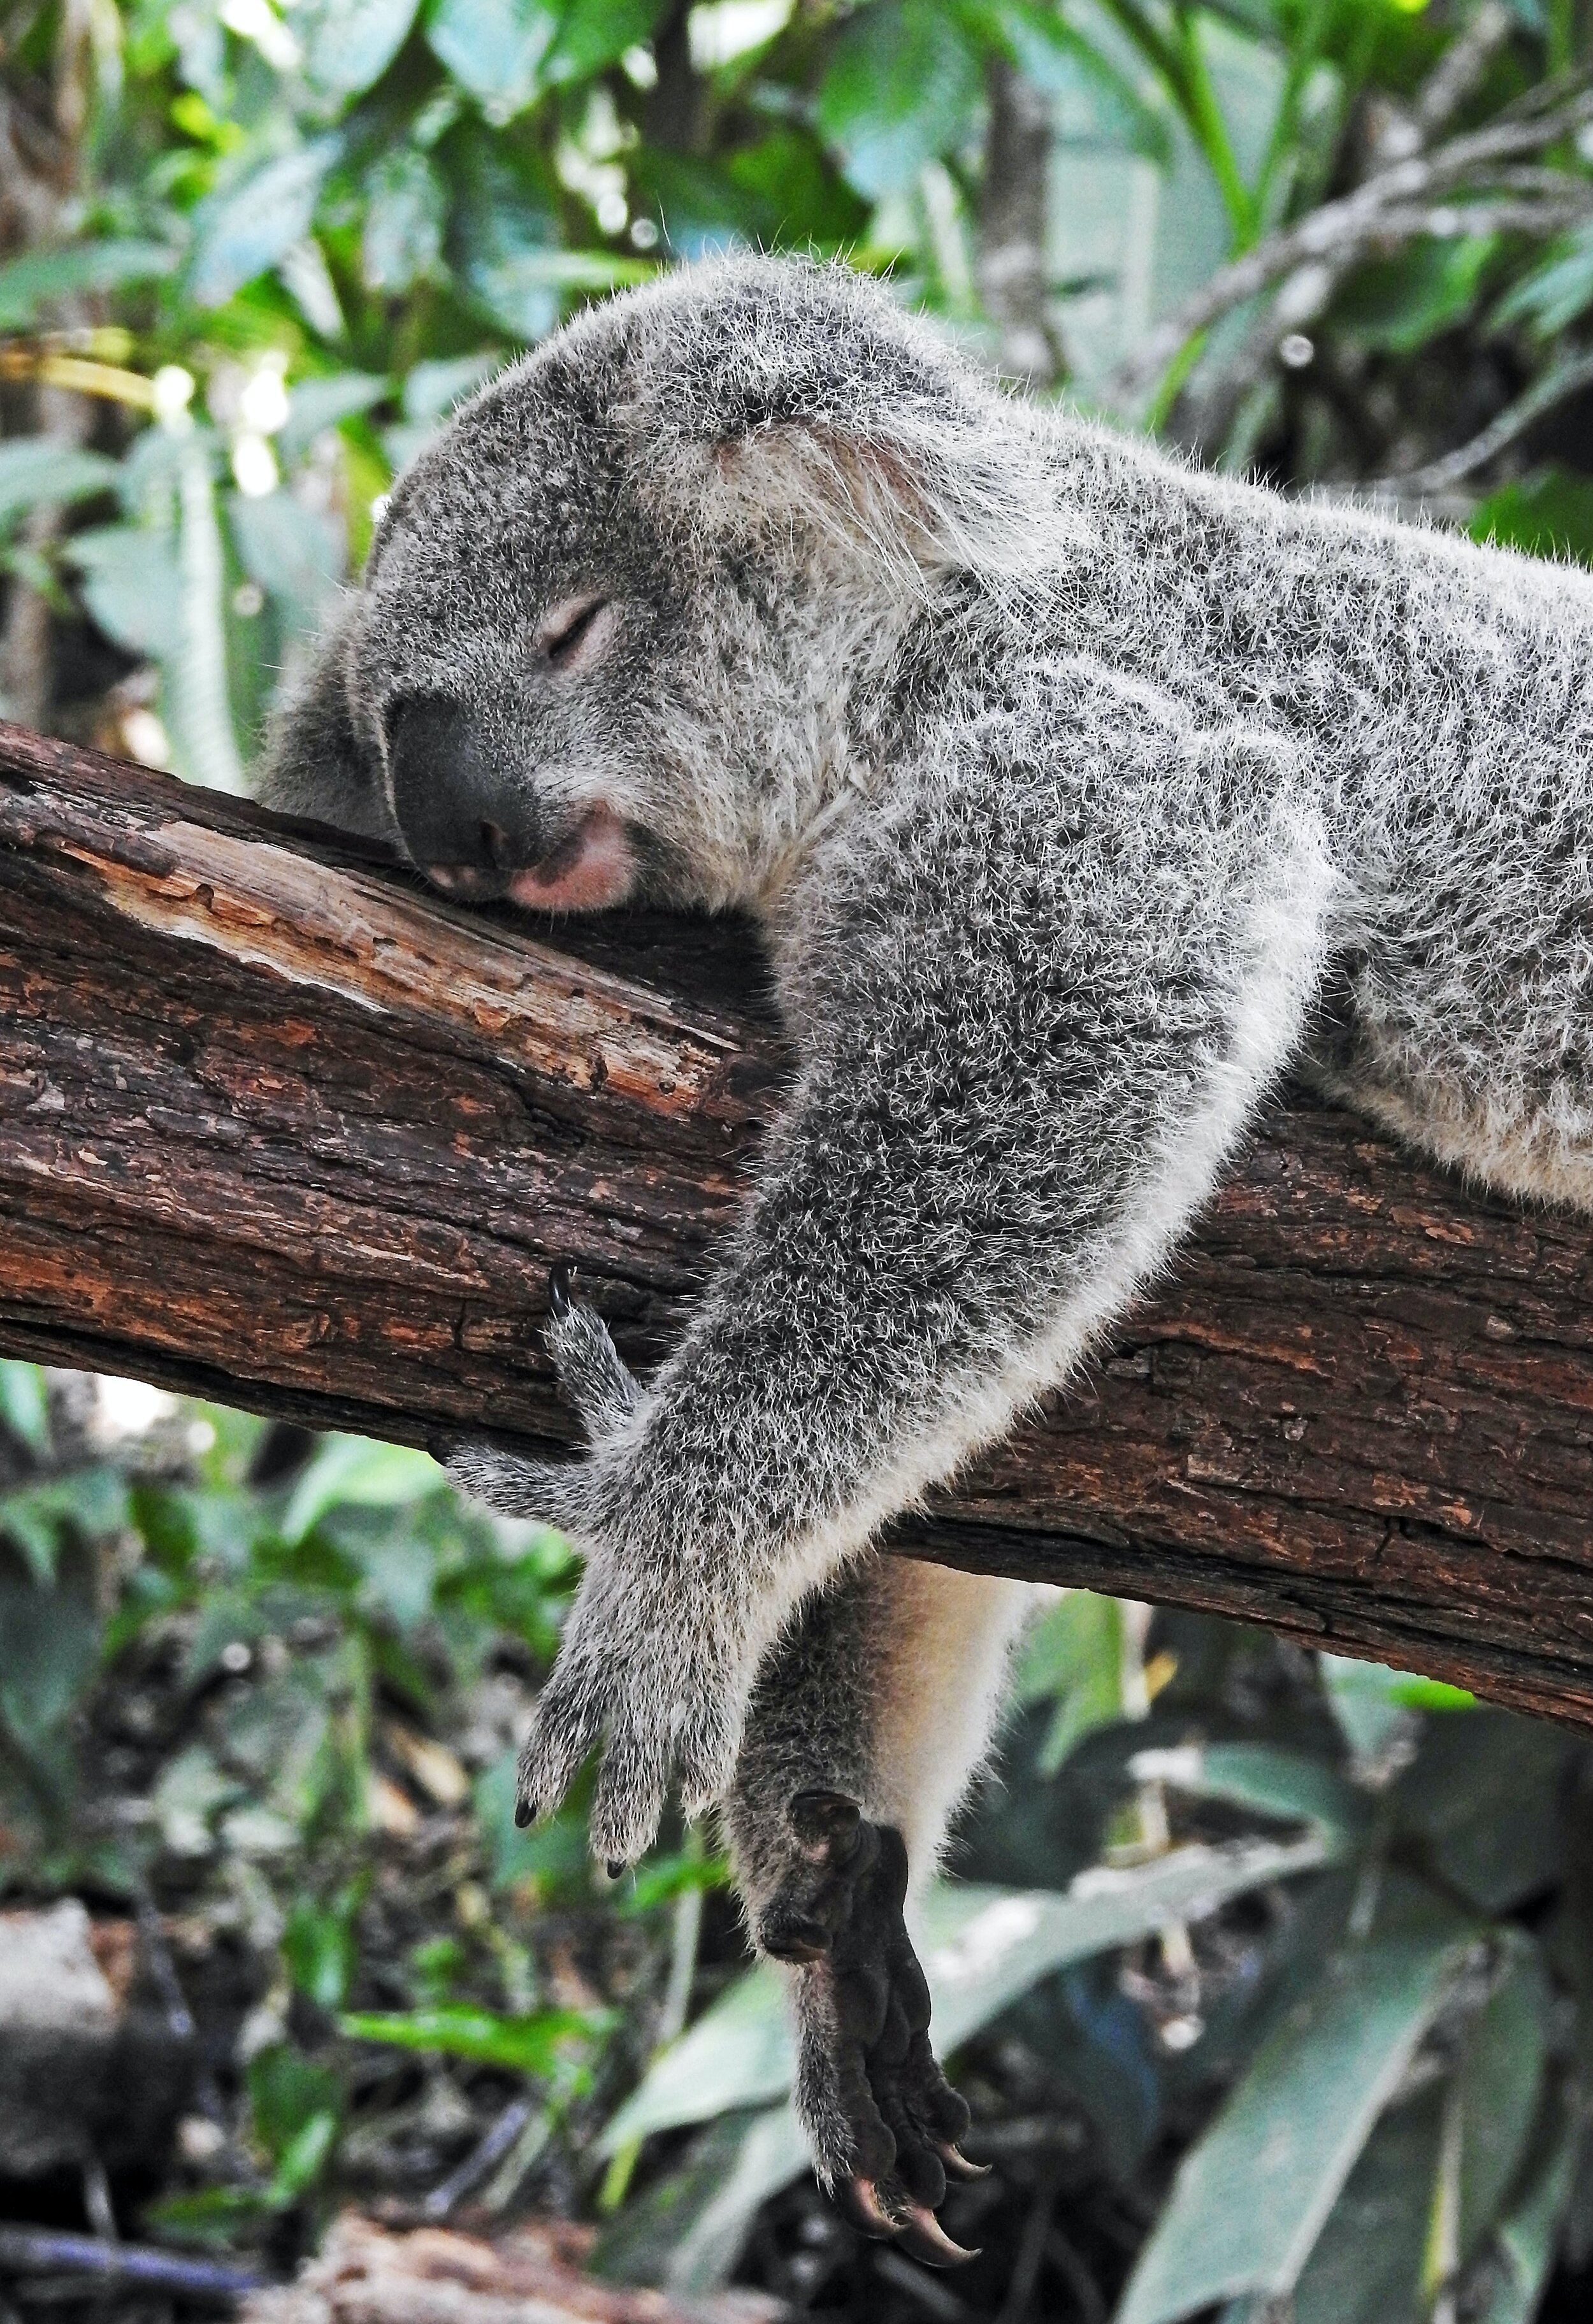 koalas apparently sleep over 20 hours a day. Fact or Fiction?